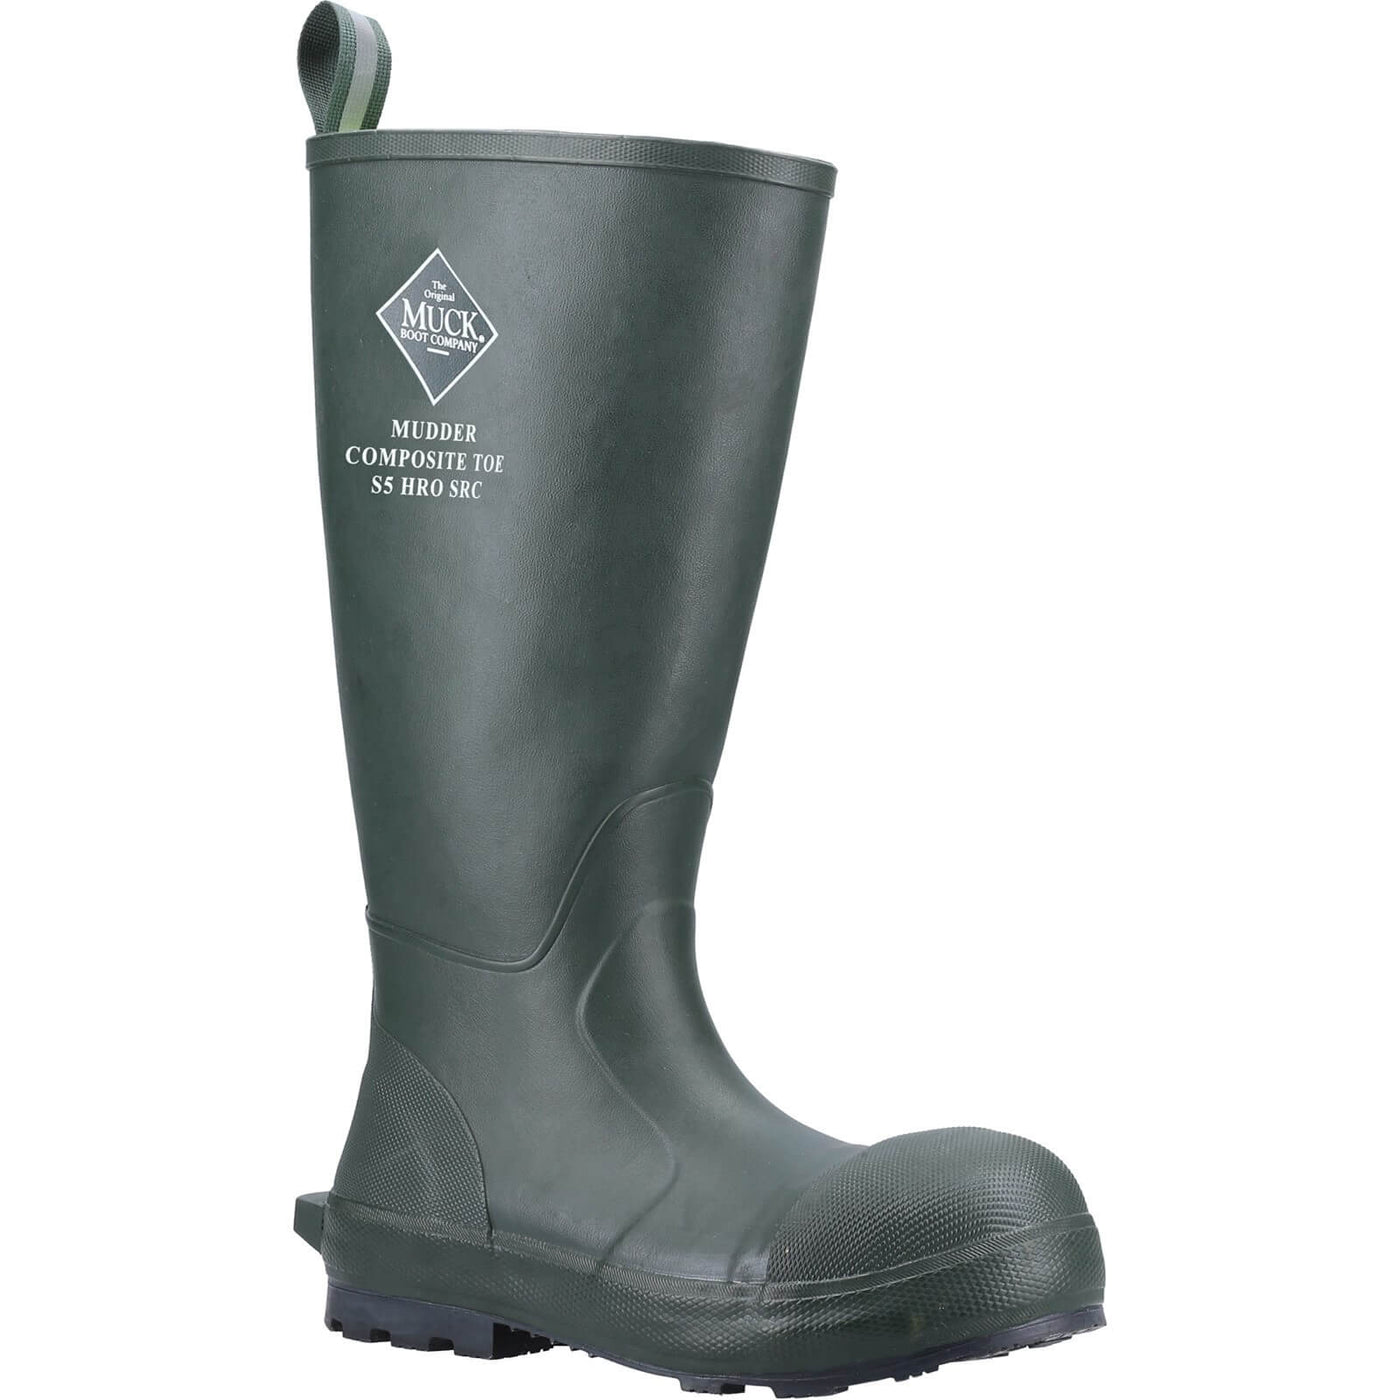 Muck Boots Mudder S5 Tall Safety Wellington Boots Moss 1#colour_moss-army-green